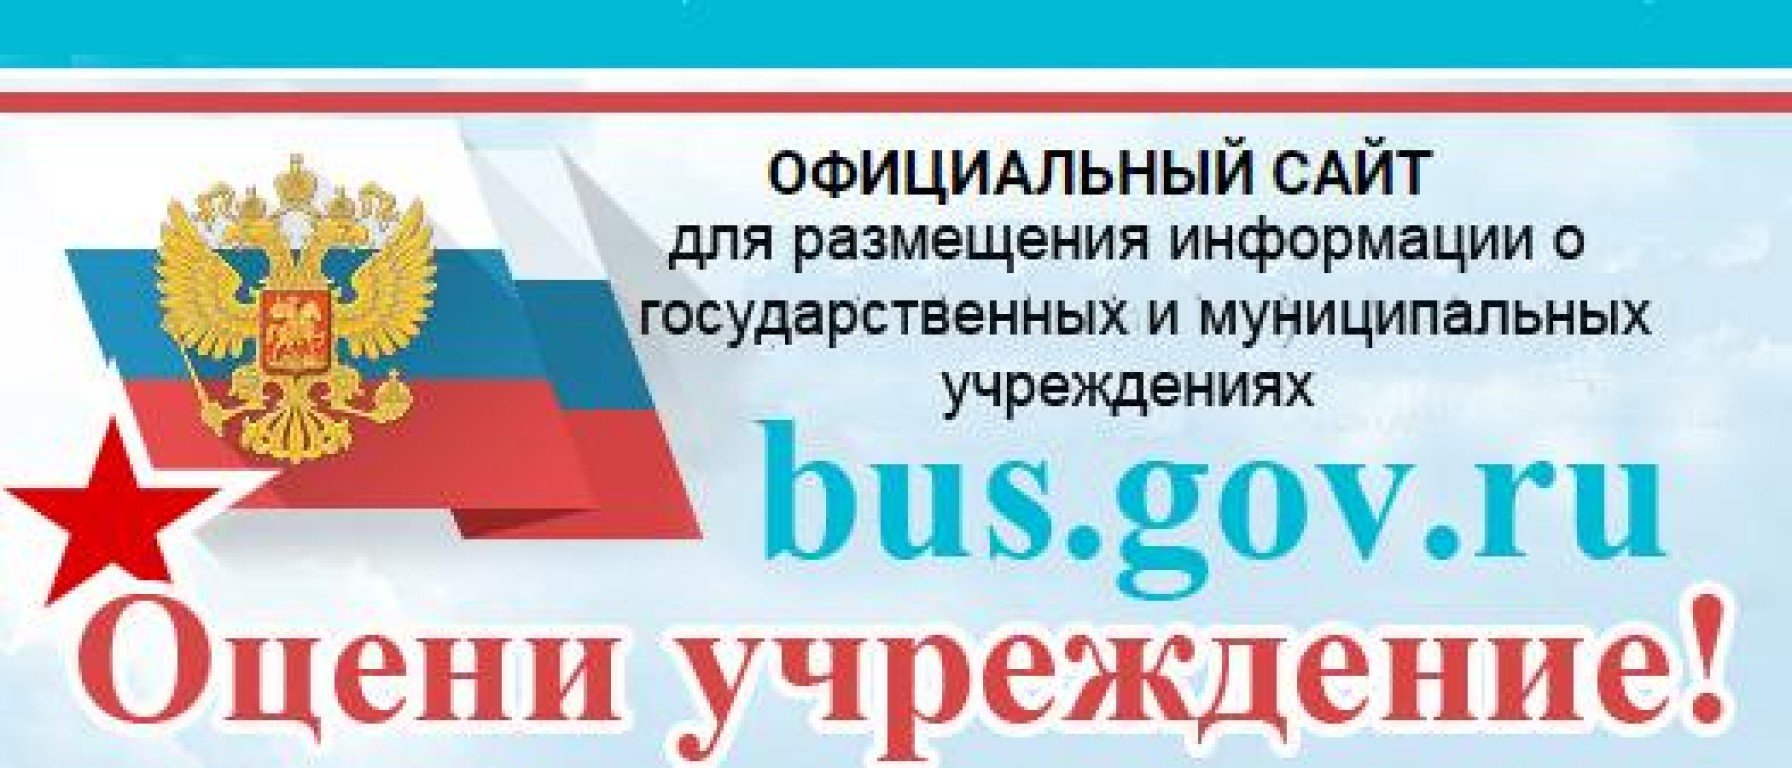 Https cc gov ru. Бас гов ру баннер. Bus gov баннер. Bus.gov.ru. Bus.gov.ru баннер.